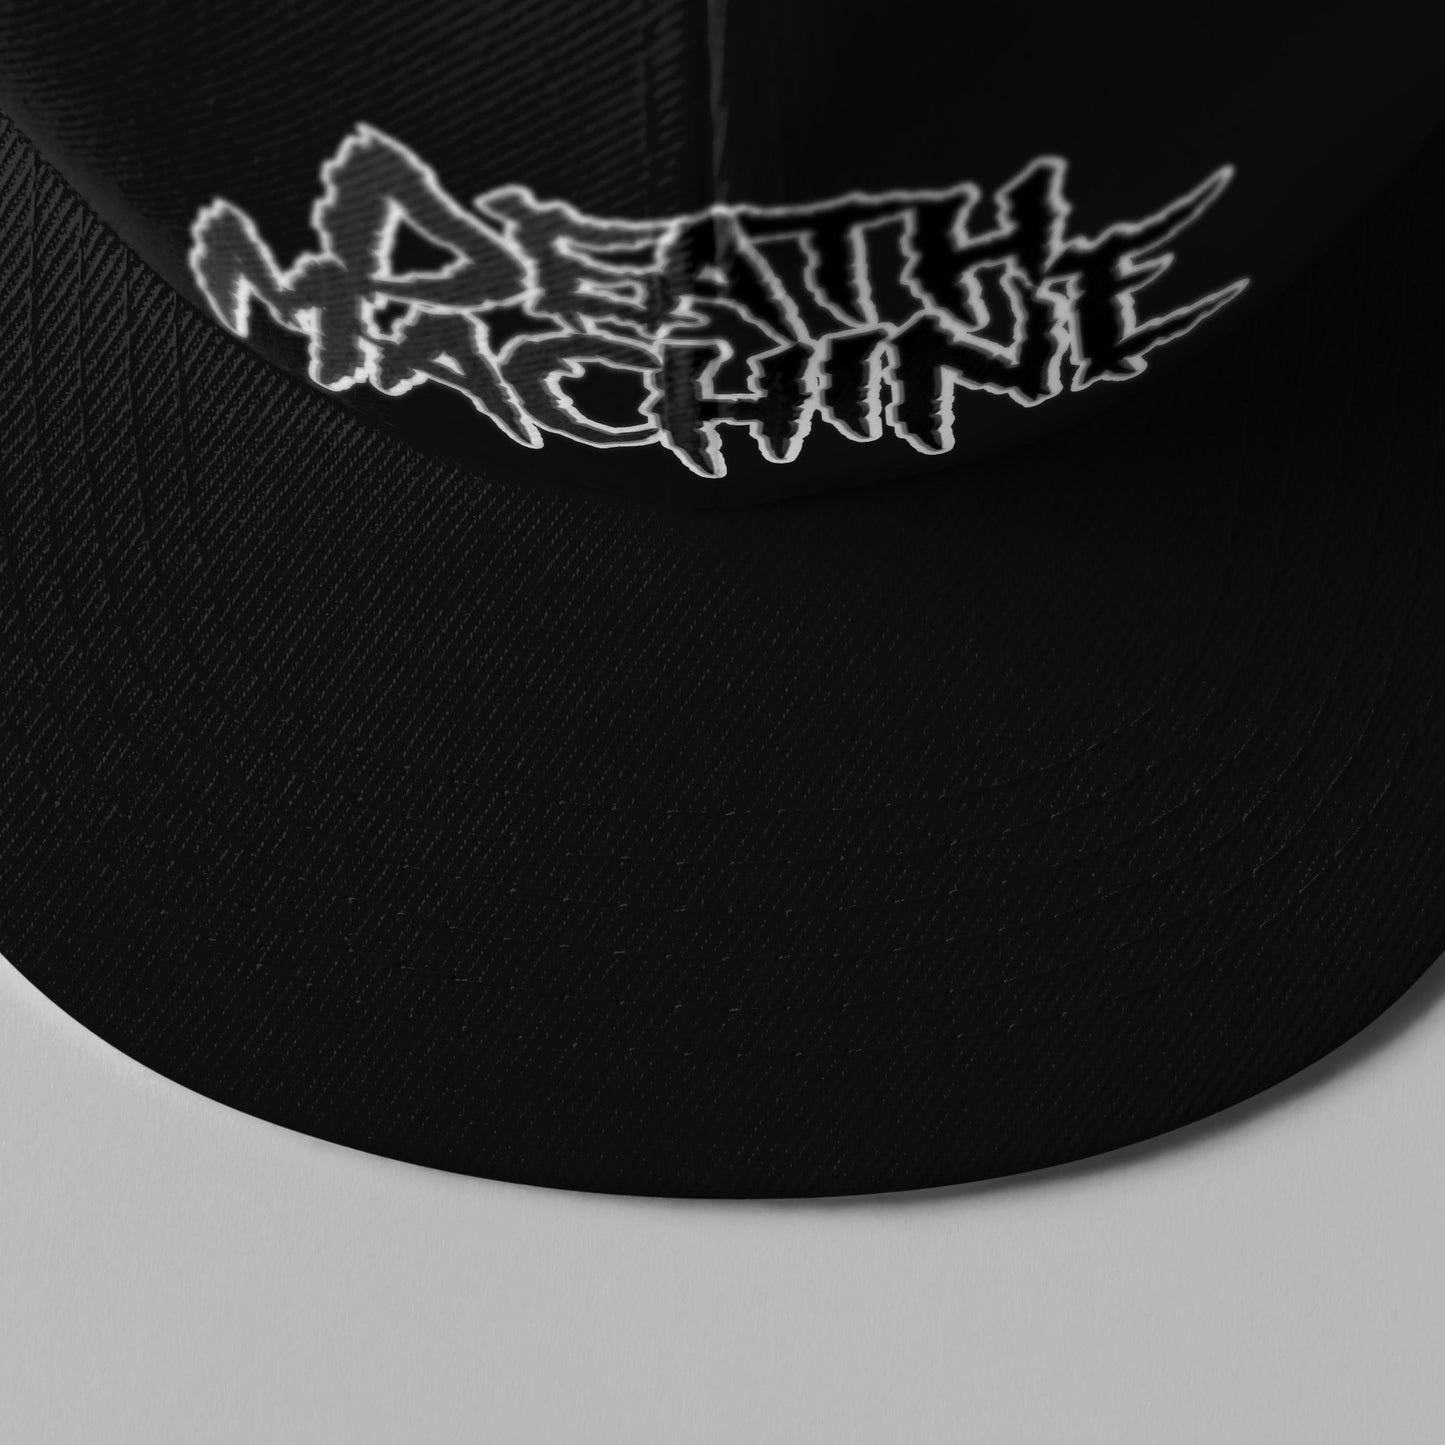 Sami Callihan "Death Machine" Snapback Hats